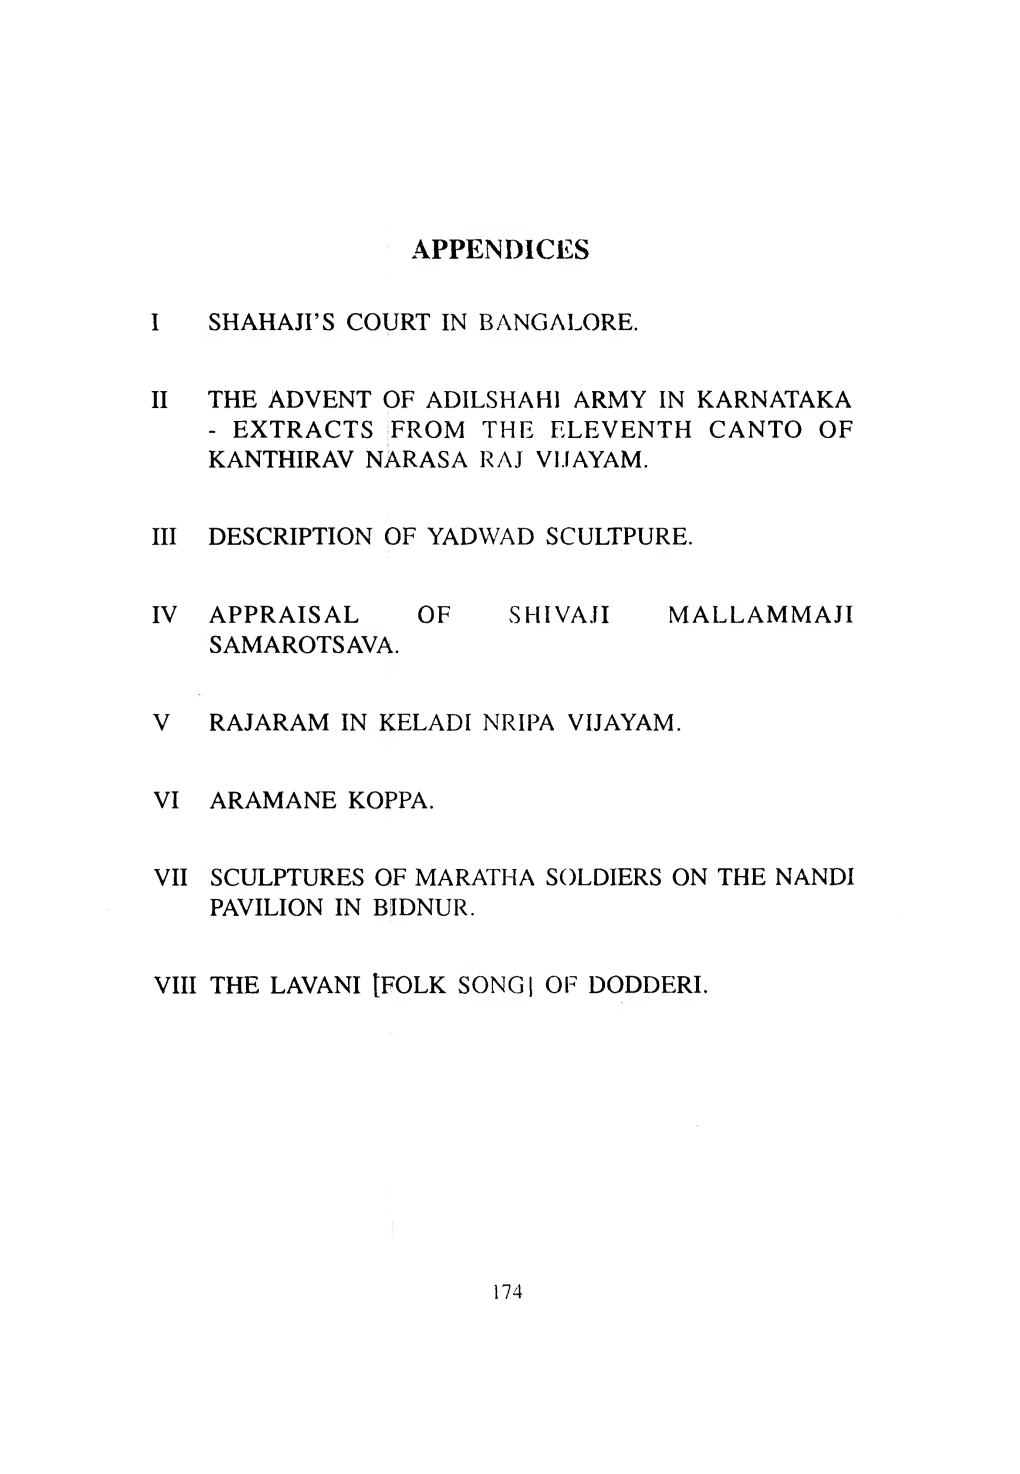 I SHAHAJI's COURT in BANGALORE. II the ADVENT of Adilshahl ARMY in KARNATAKA